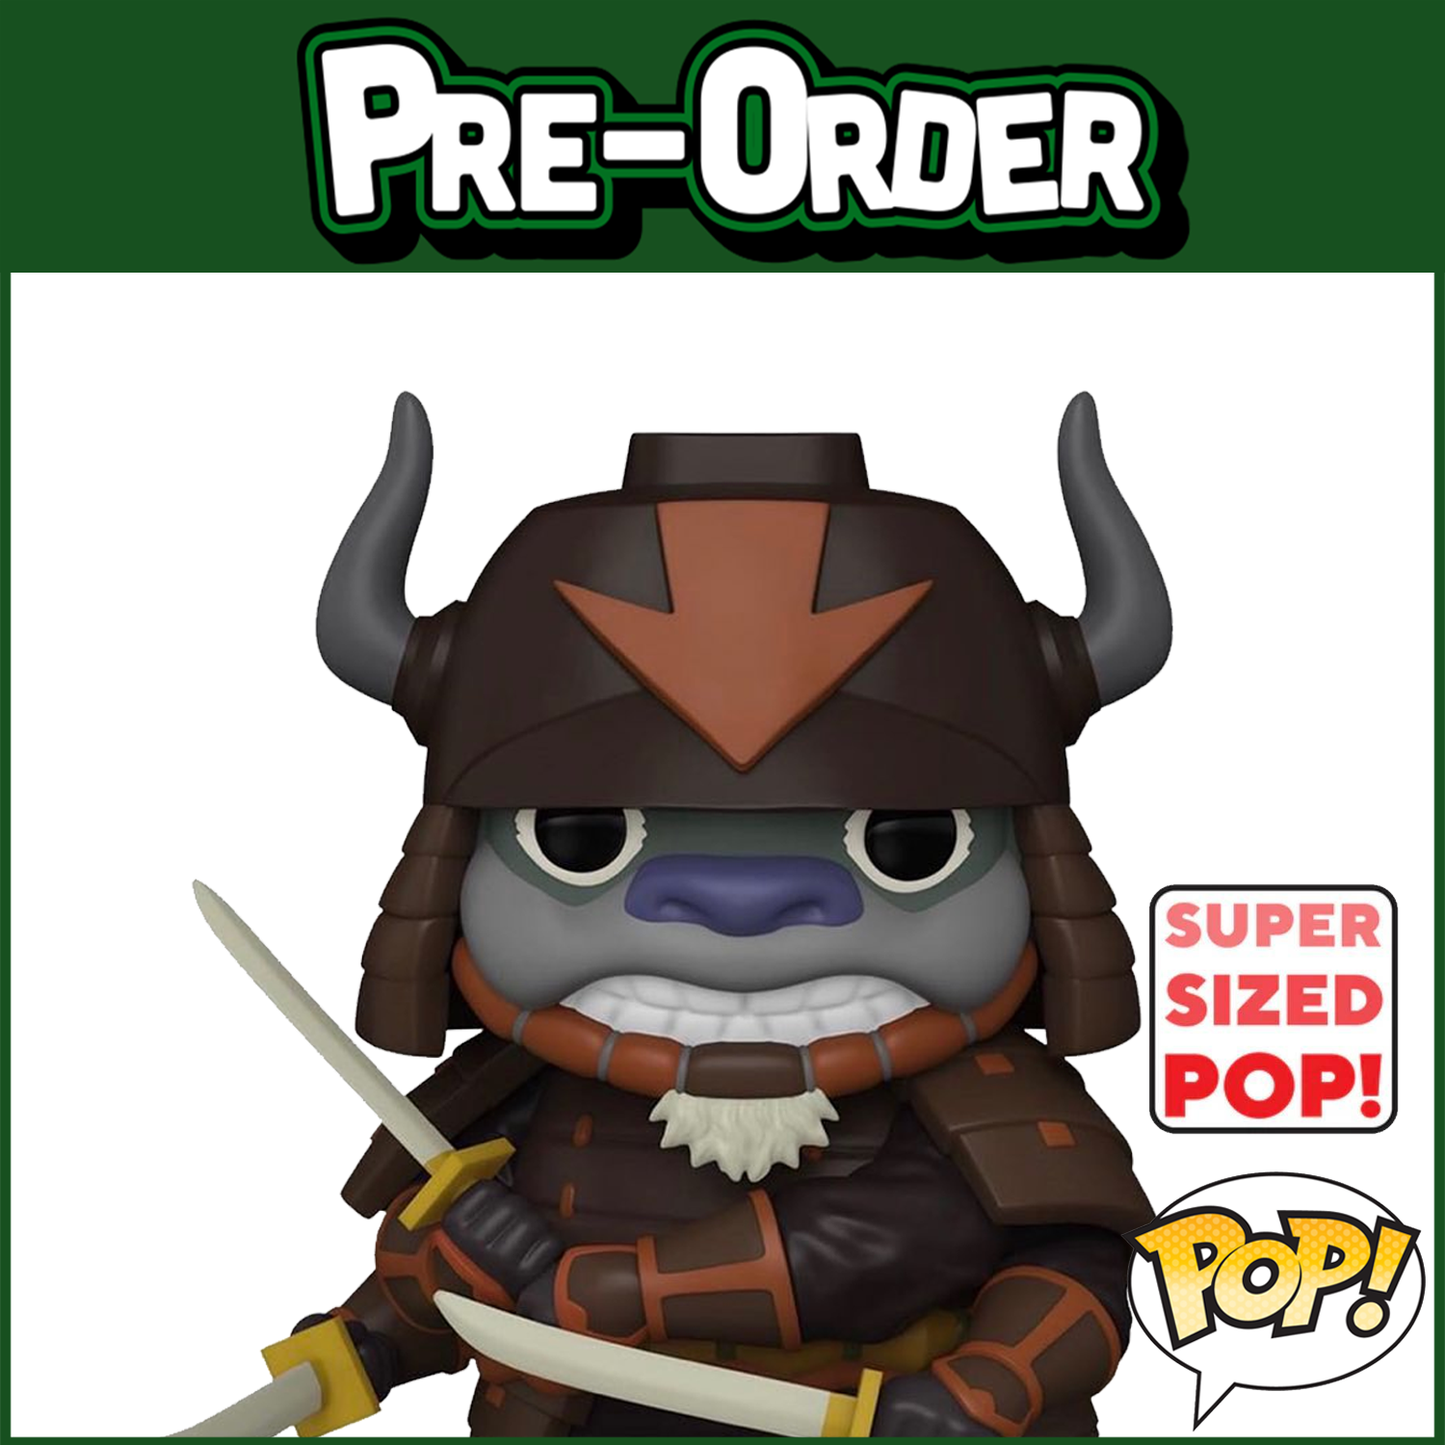 (PRE-ORDER) Funko POP! Super: Avatar The Last Airbender - Appa with Armor #1443